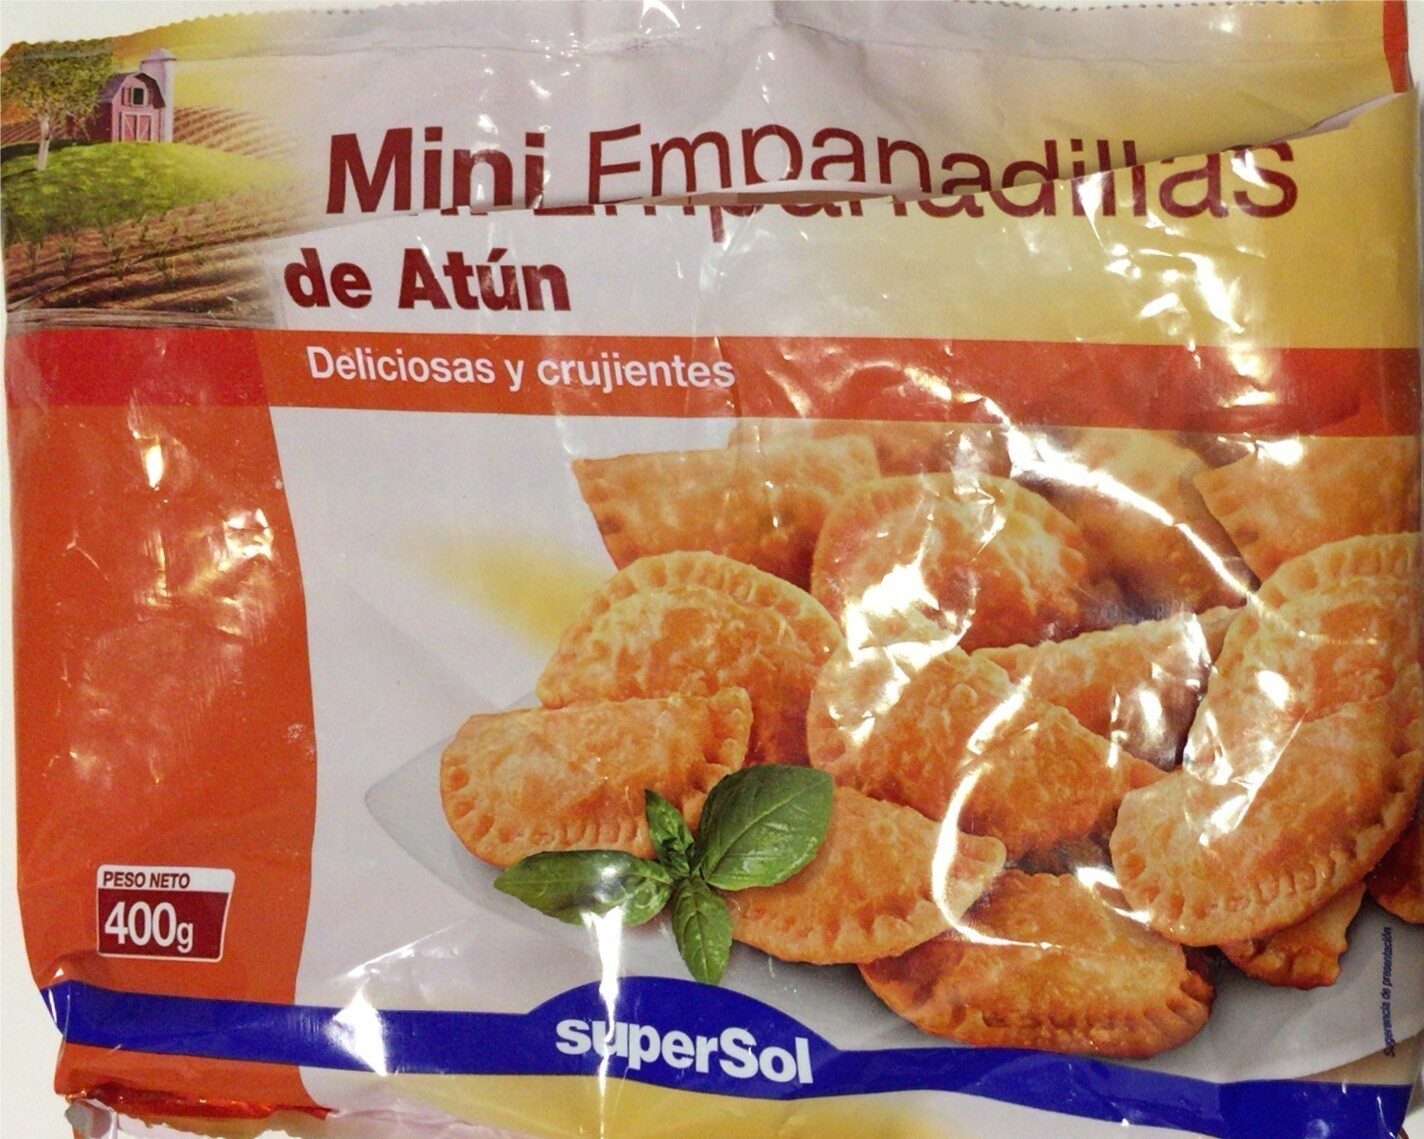 Mini Empanadillas de Atún - Product - es